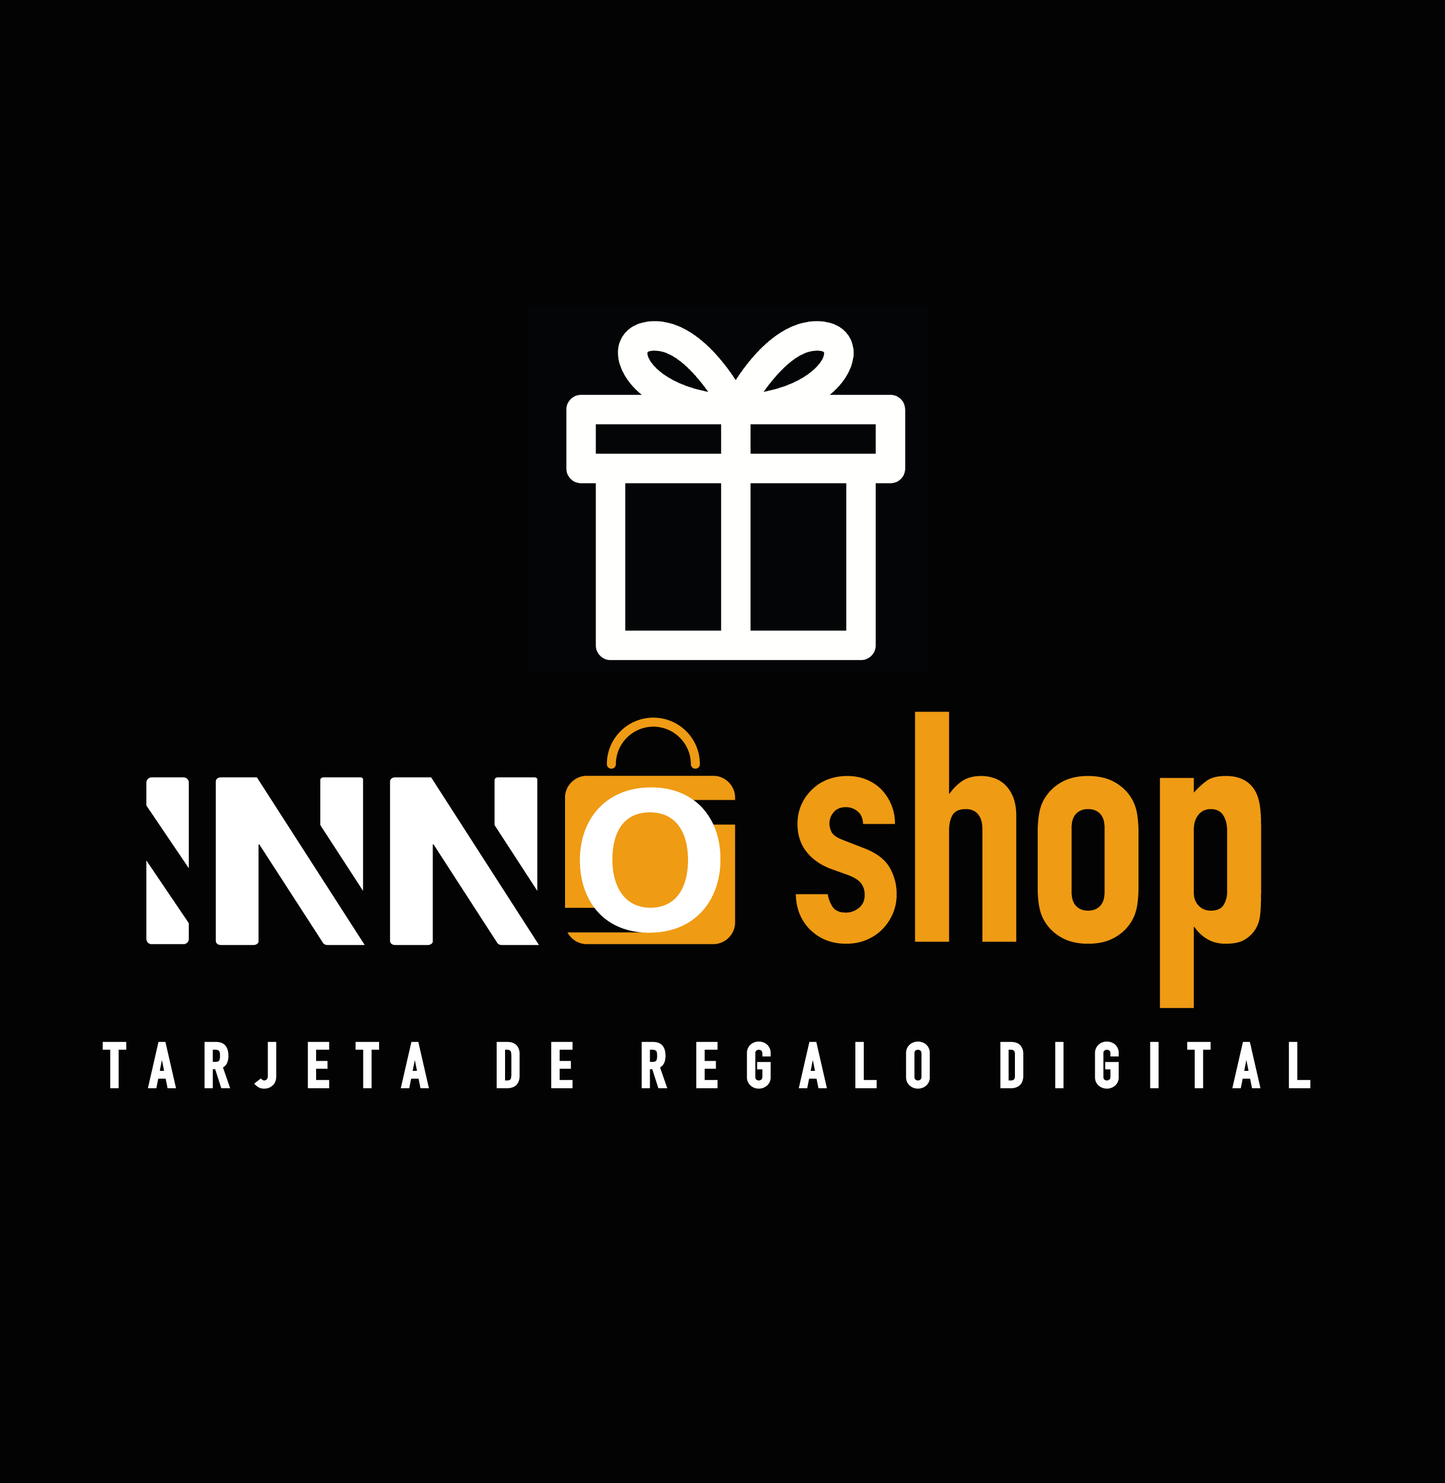 TARJETA DE REGALO DIGITAL EN INNOSHOPCR.COM